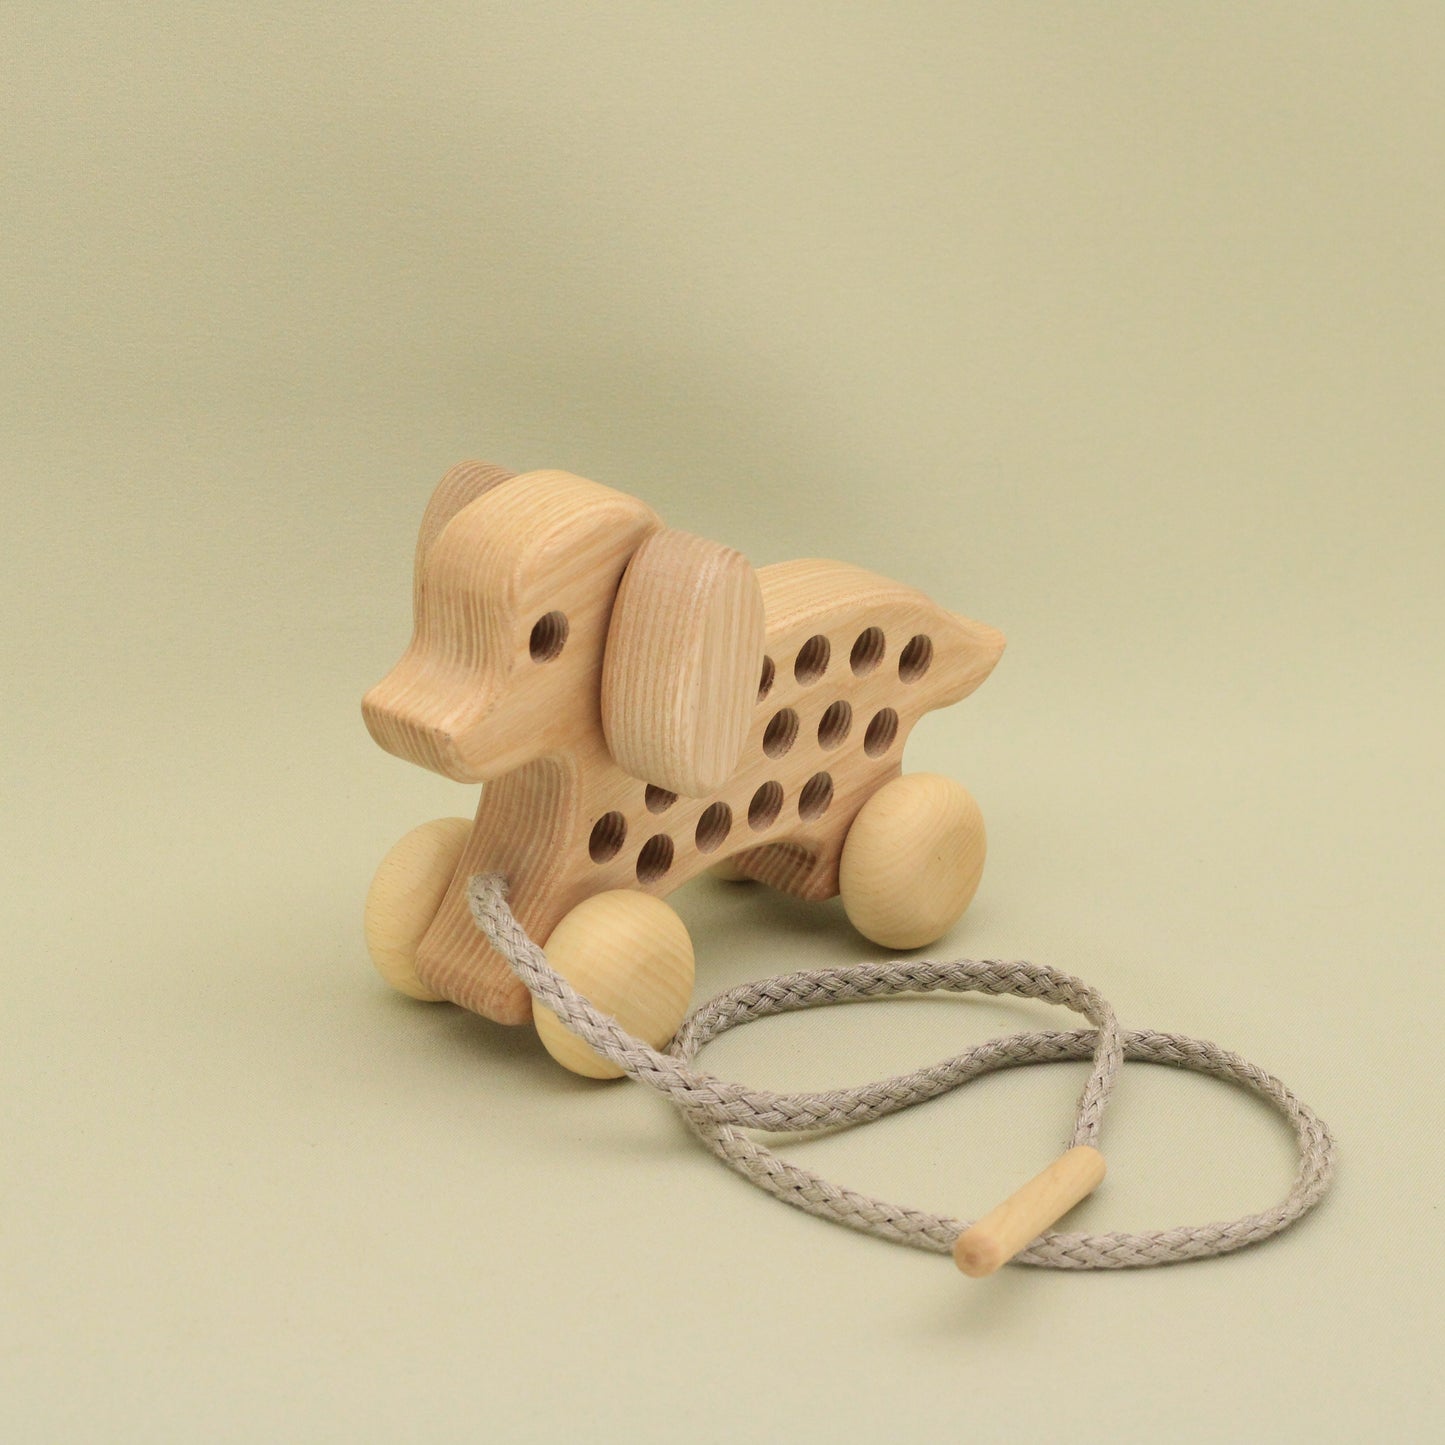 Lotes Toys Natural Wooden Threading Lacing Dog TT43